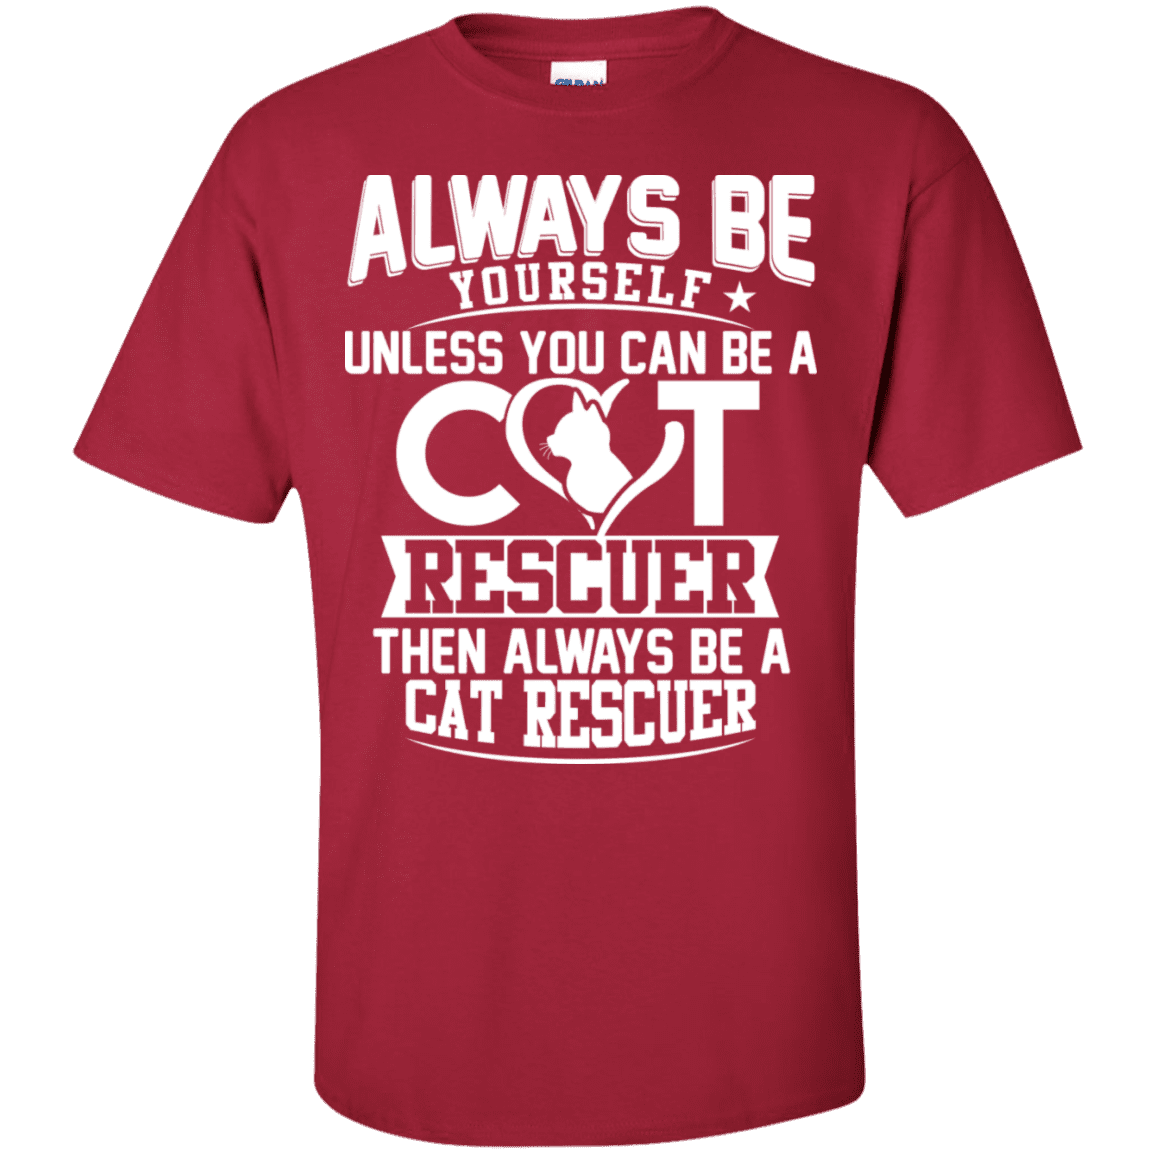 Always Be A Cat Rescuer - T Shirt.